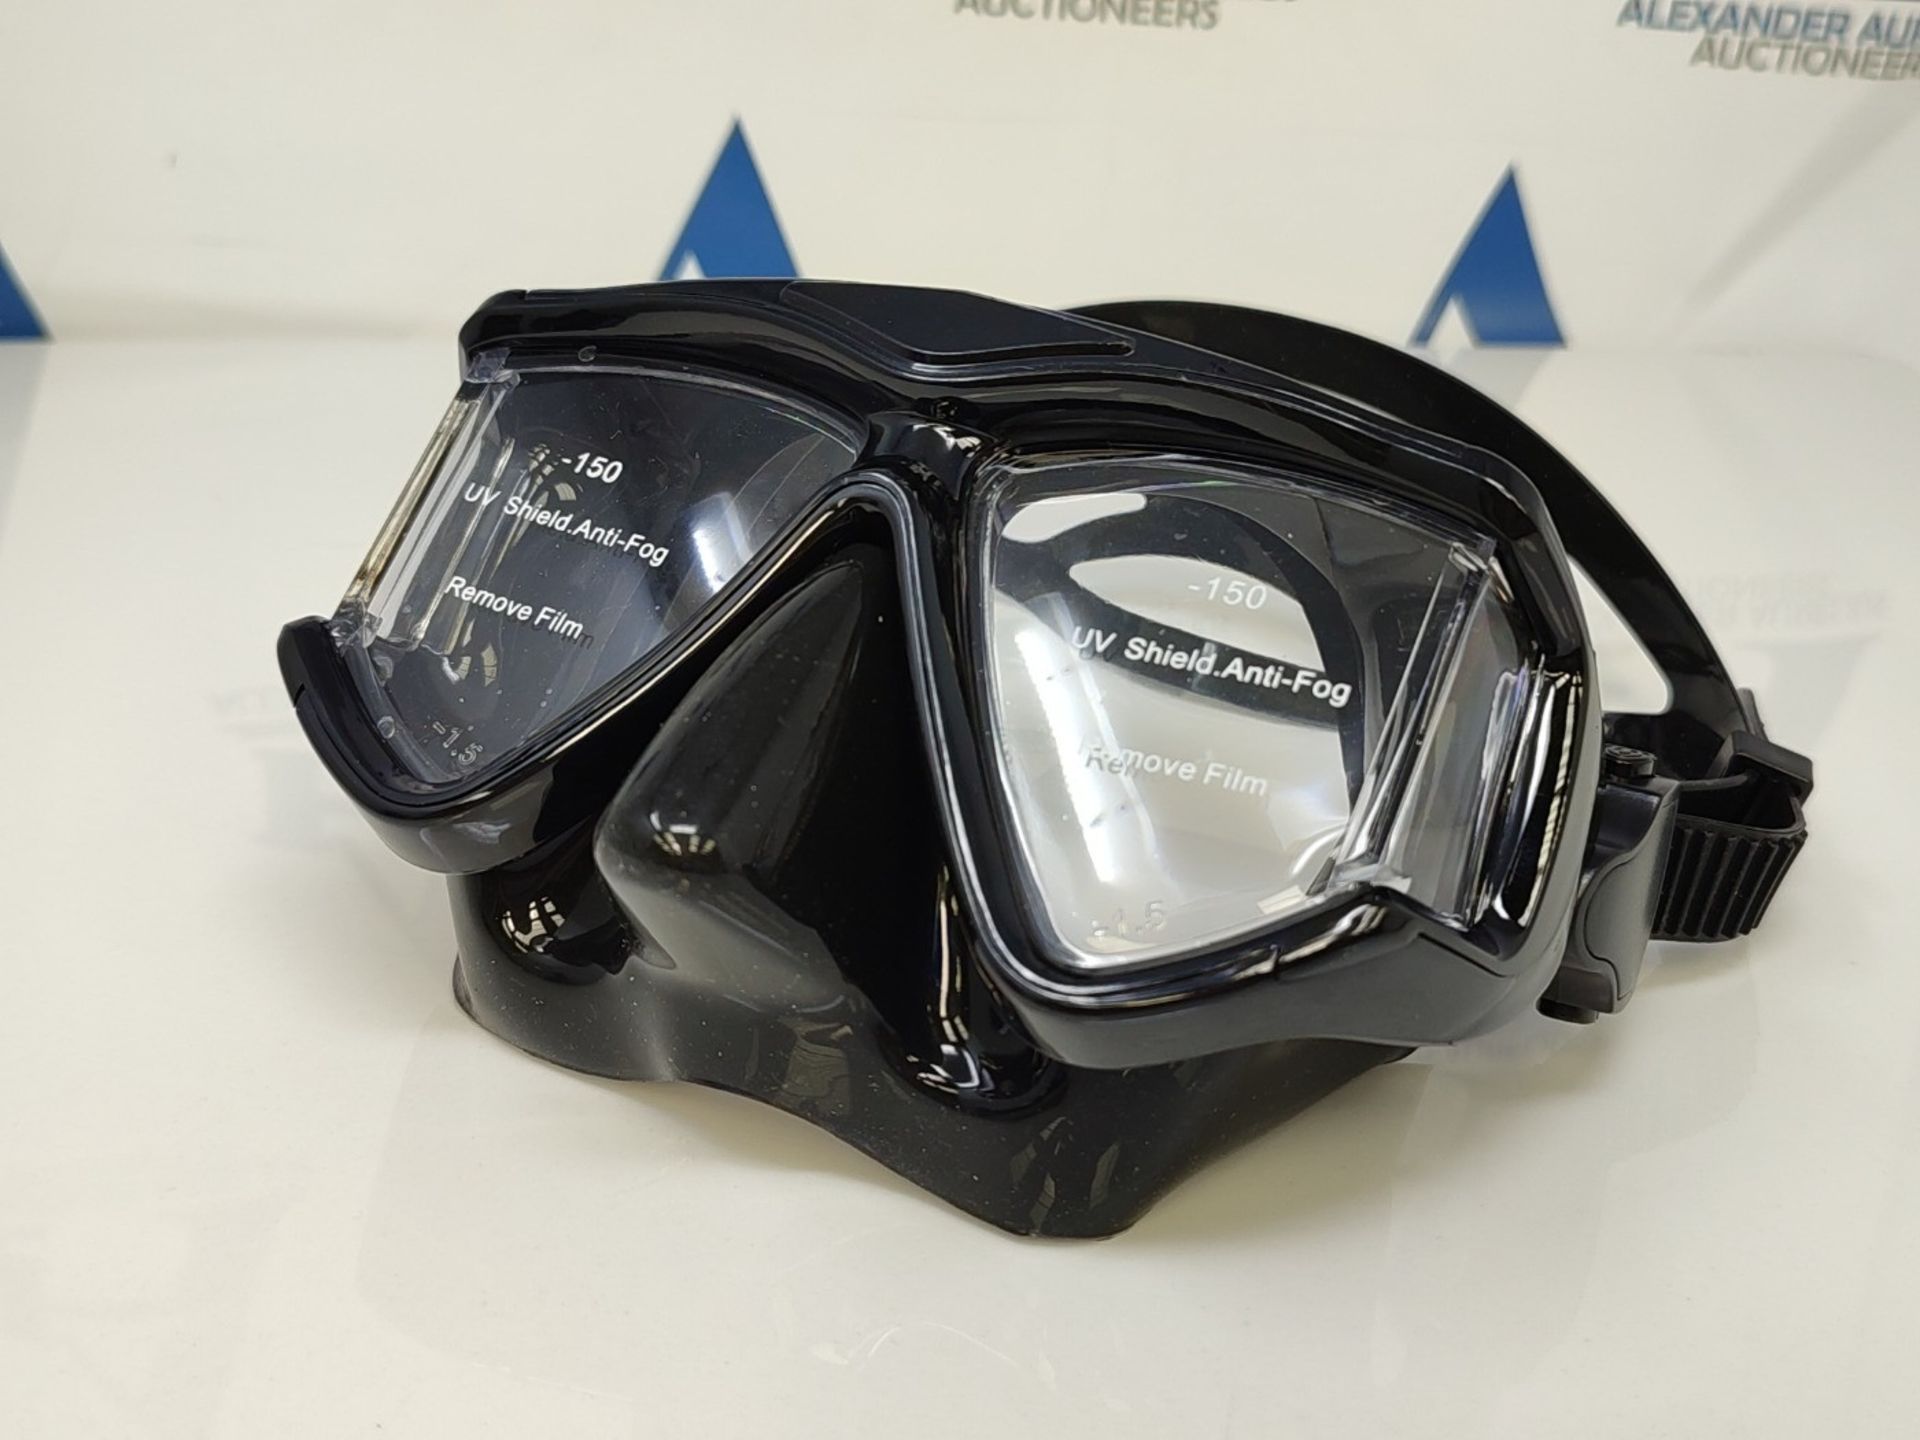 Diving mask with diopter, OWN4B resin lenses snorkel mask diver's mask correction, div